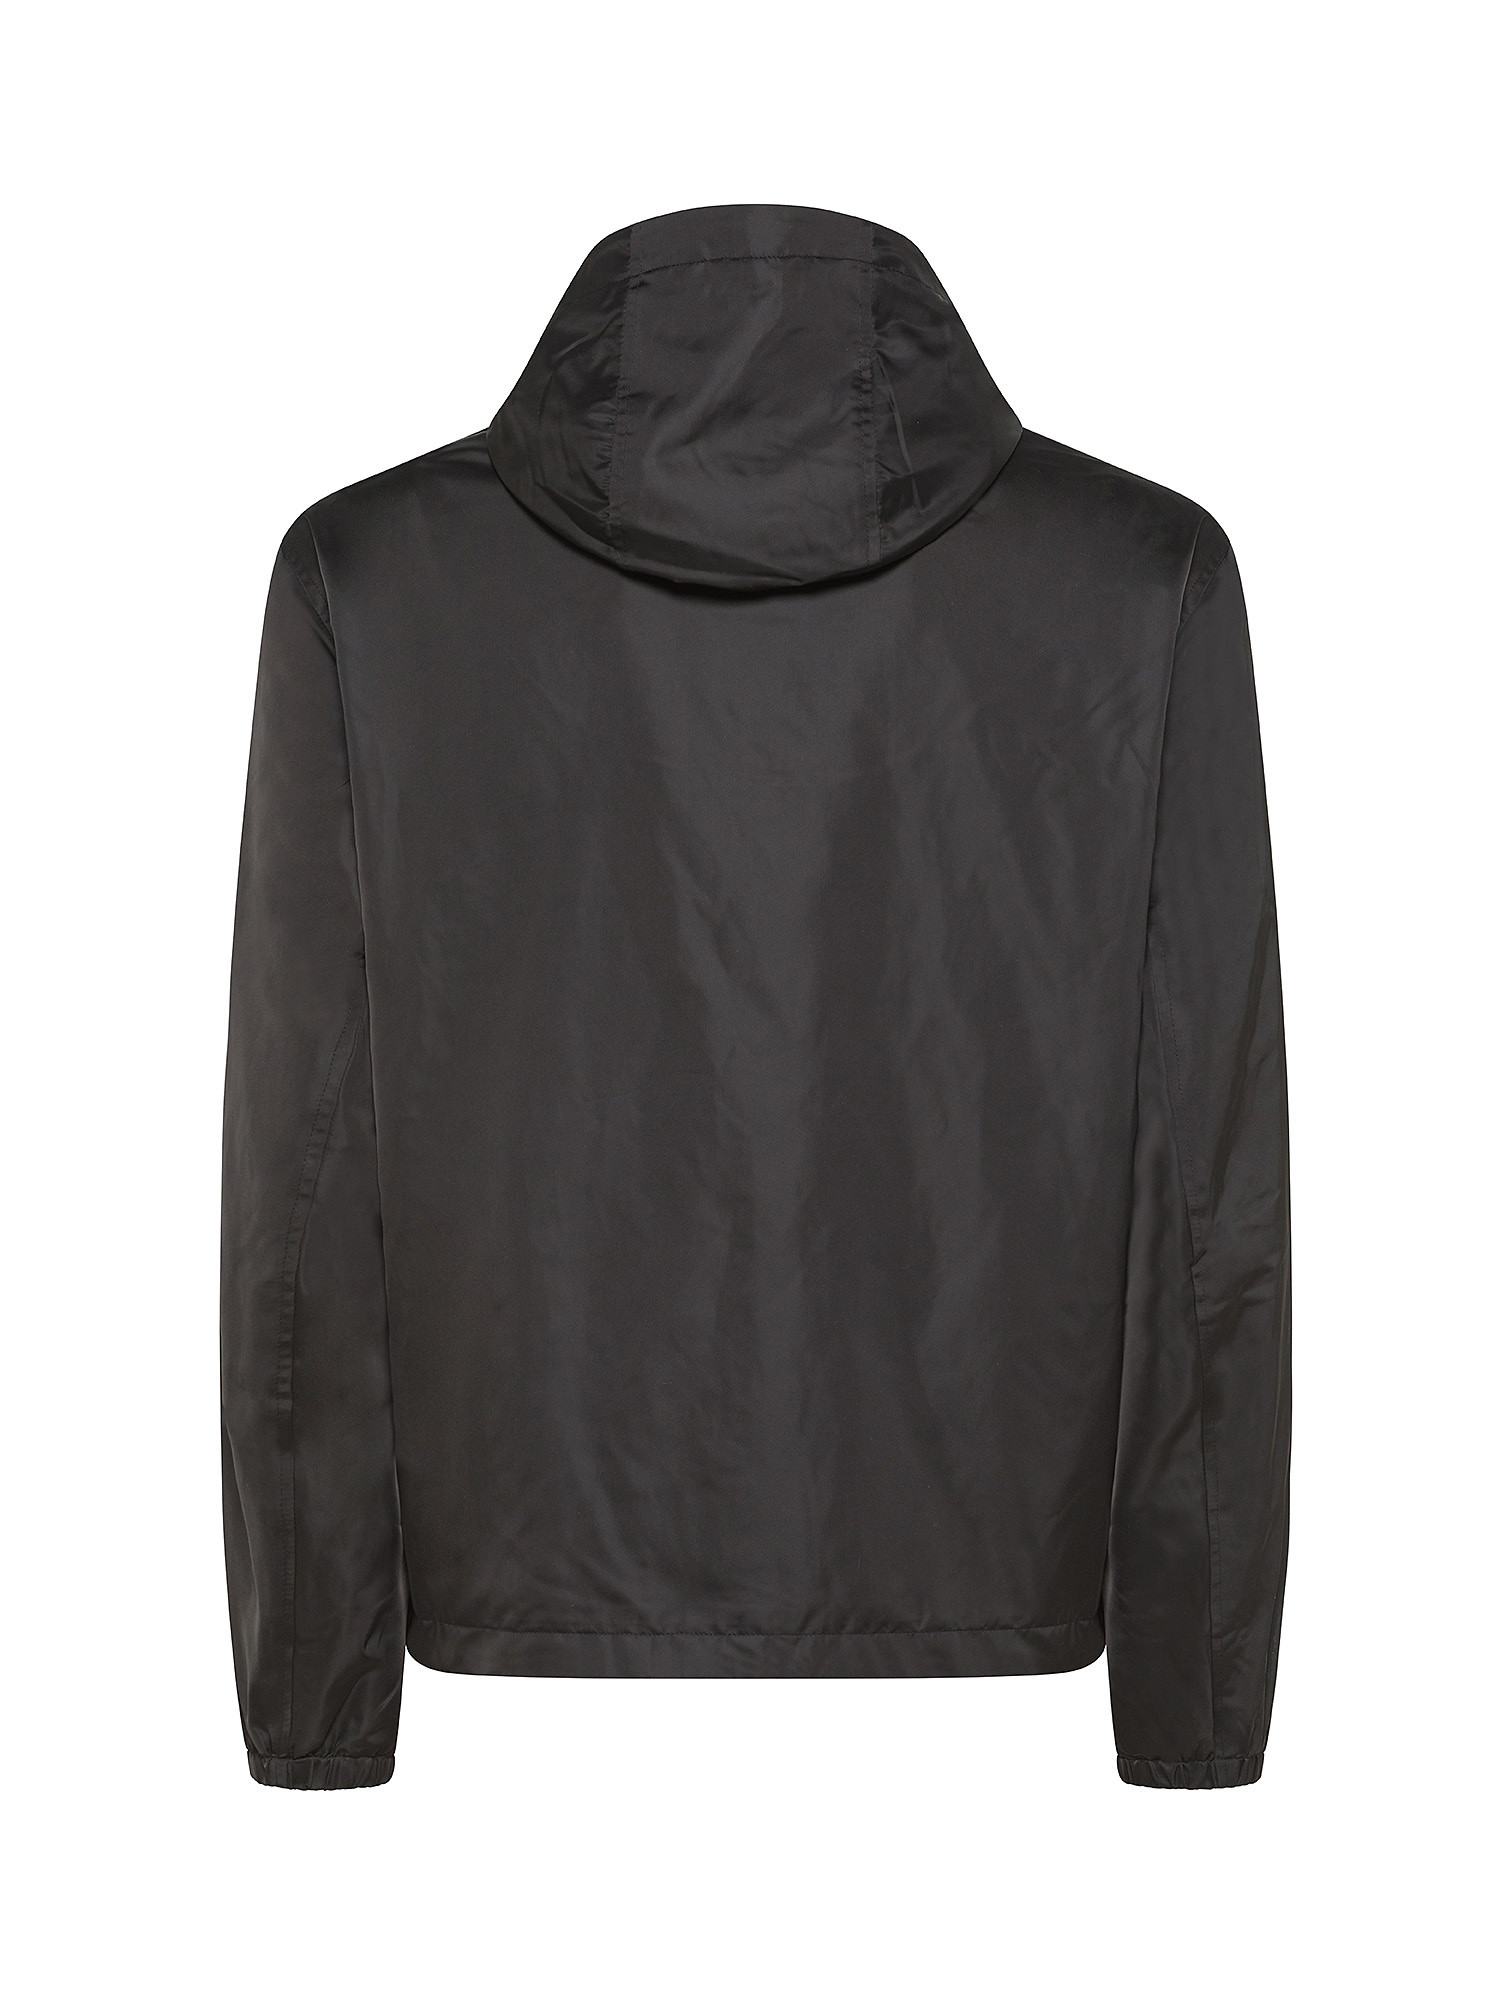 Armani Exchange - Jacket with hood and logo, Black, large image number 1